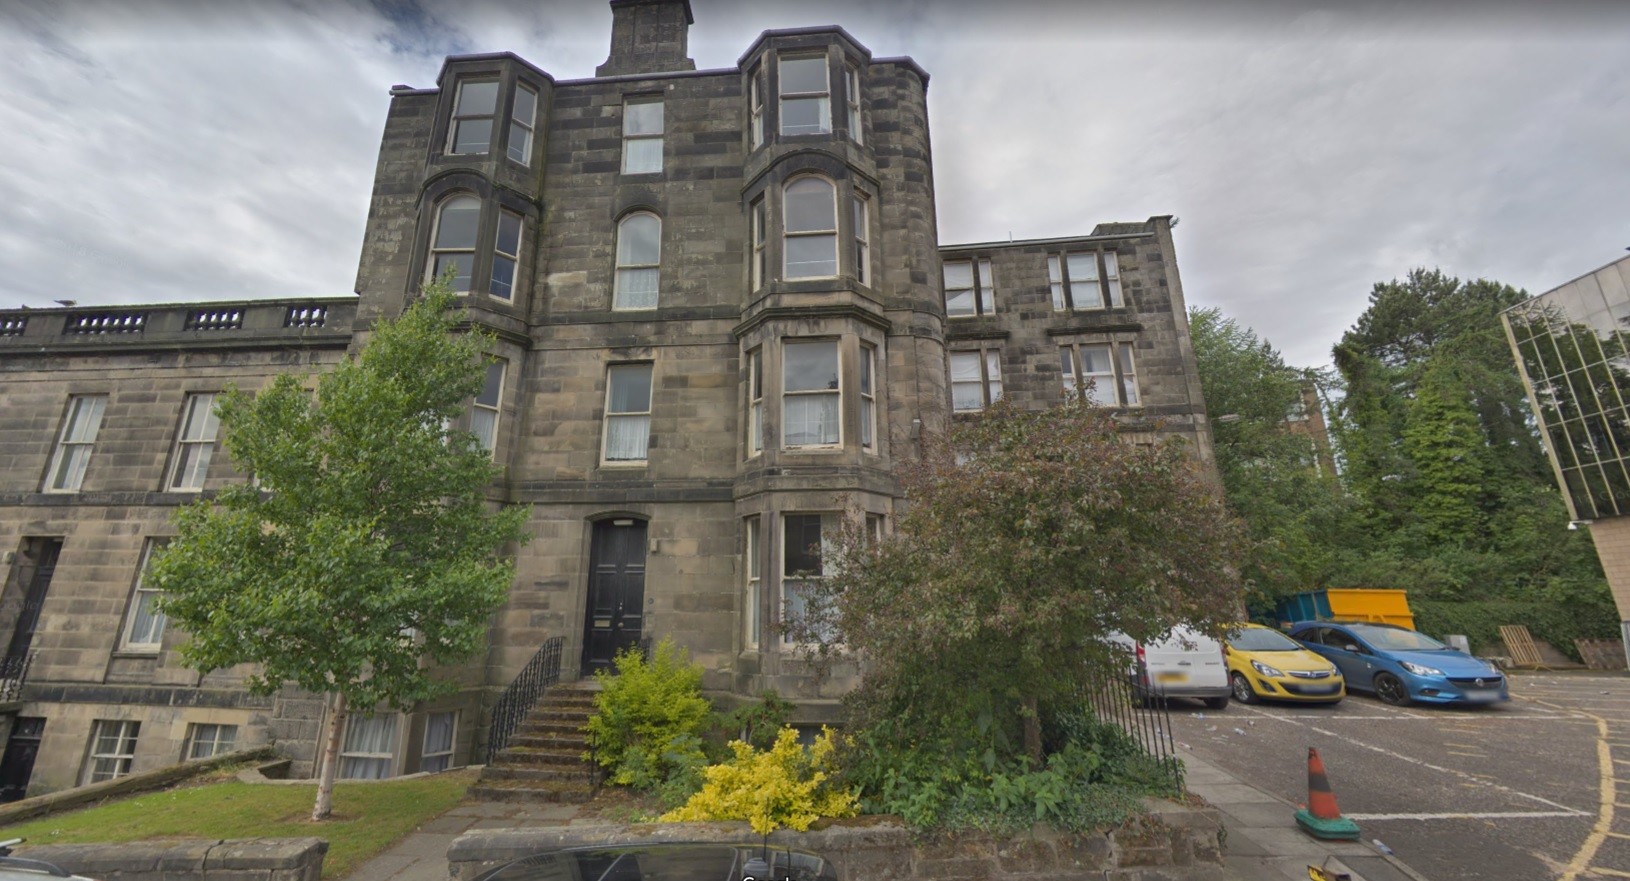 University of Dundee tenement demolition plan withdrawn